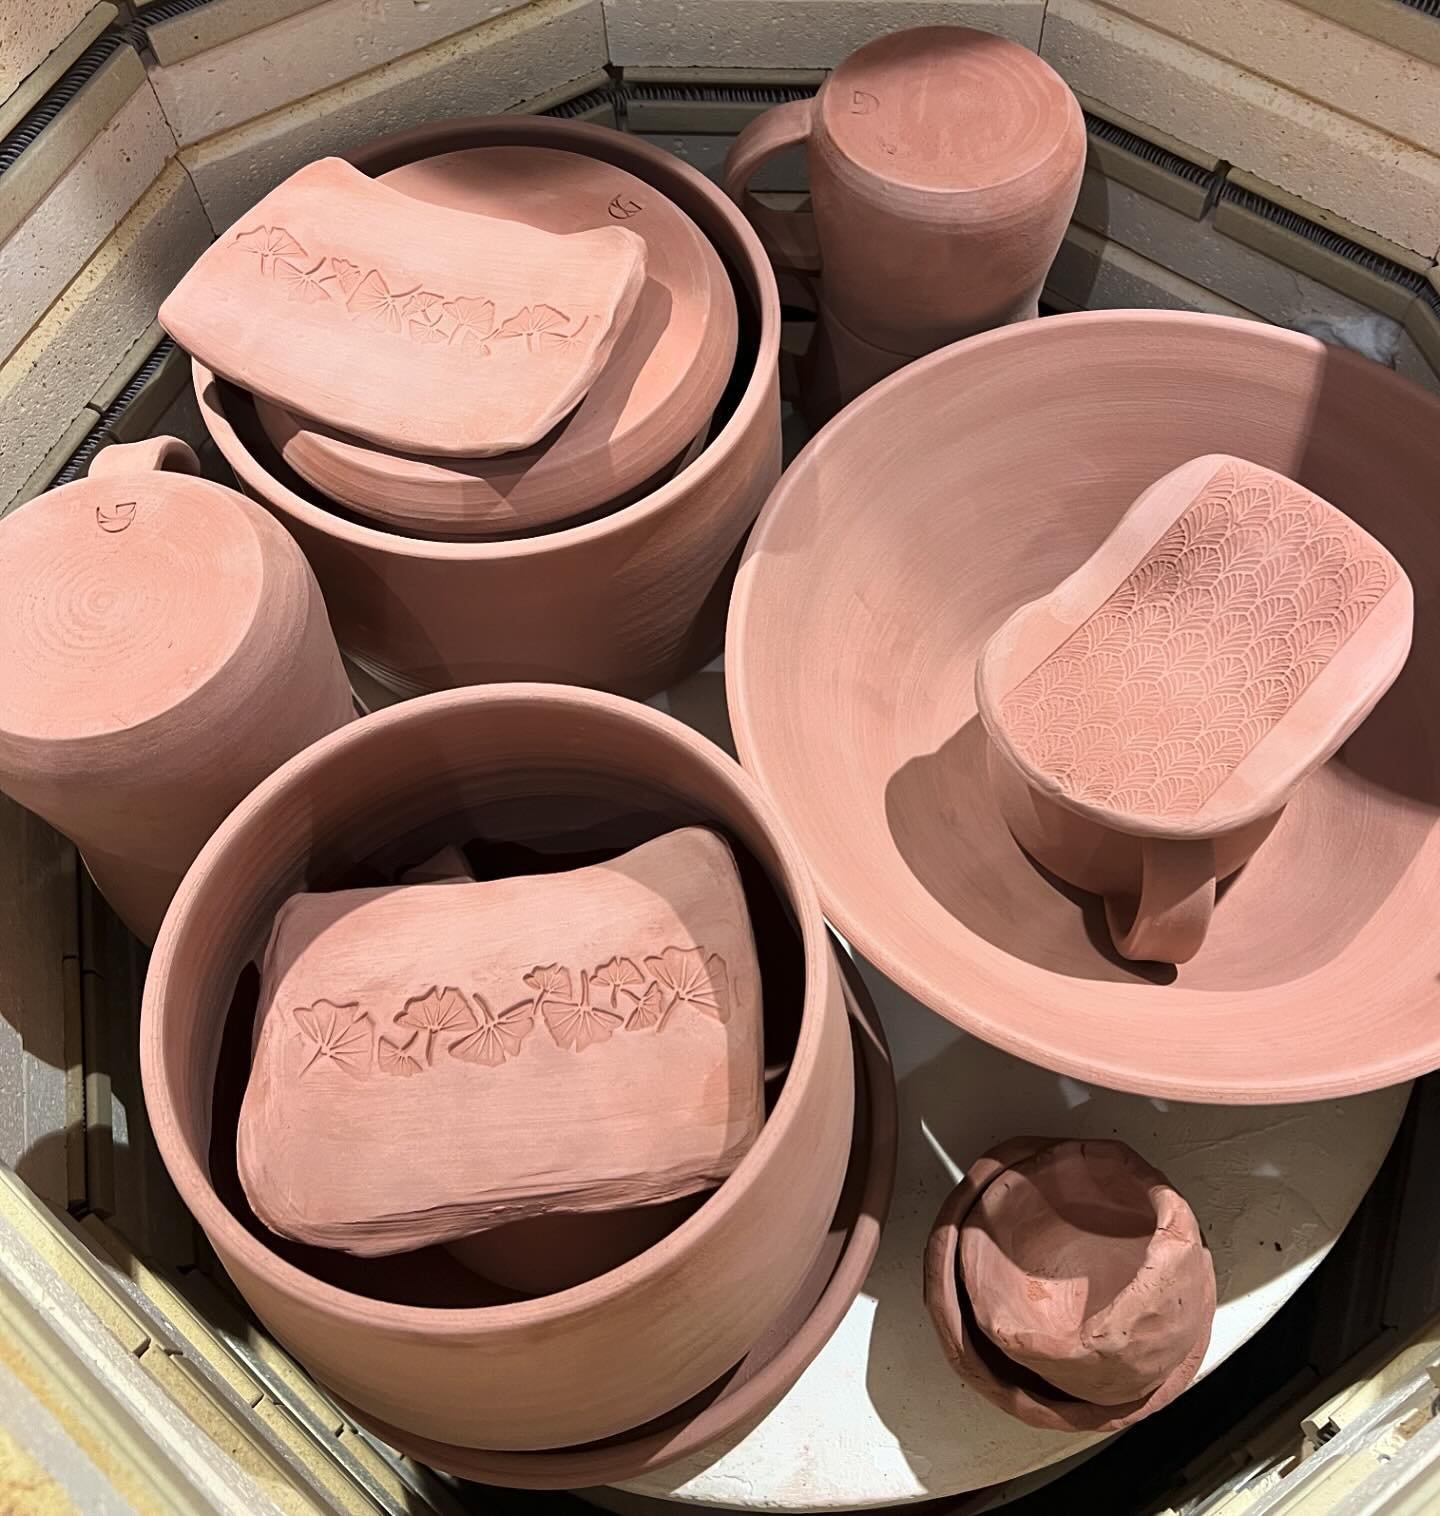 🧱🧩📚

#kiln #tumblestack #pottery #instapottery #handmade #catskills #artprocess #ceramicstudio